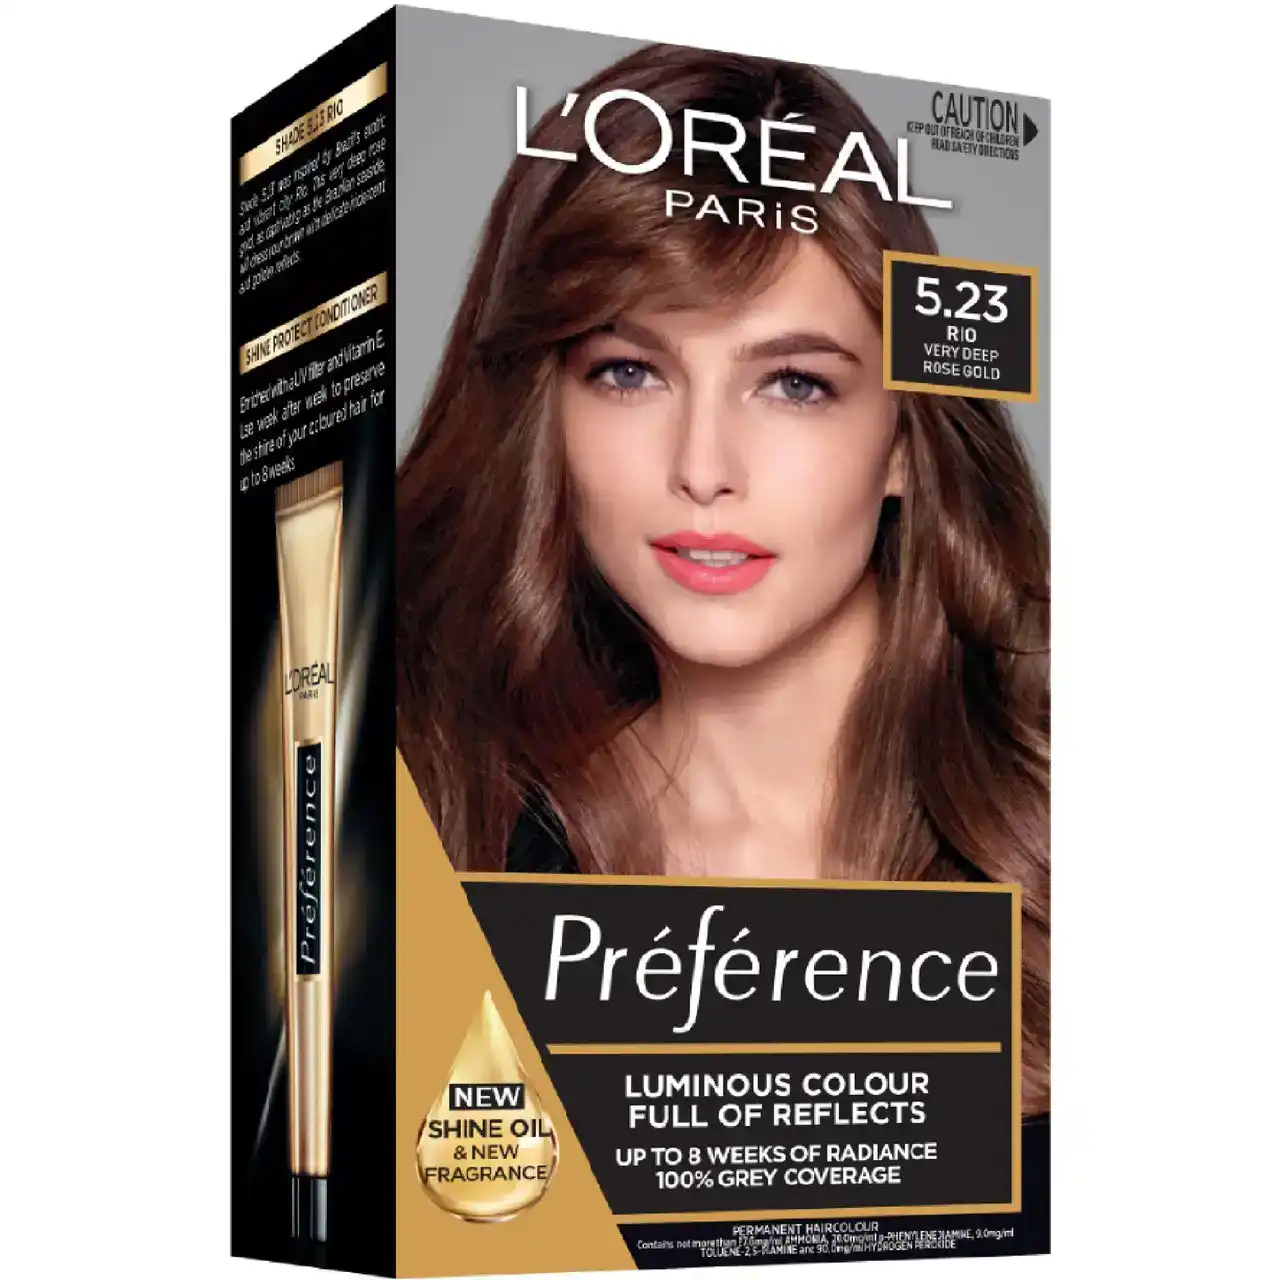 L&#39;Oreal Paris Preference Permanent Hair Colour - 5.23 Rio (Very Deep Rose Gold)